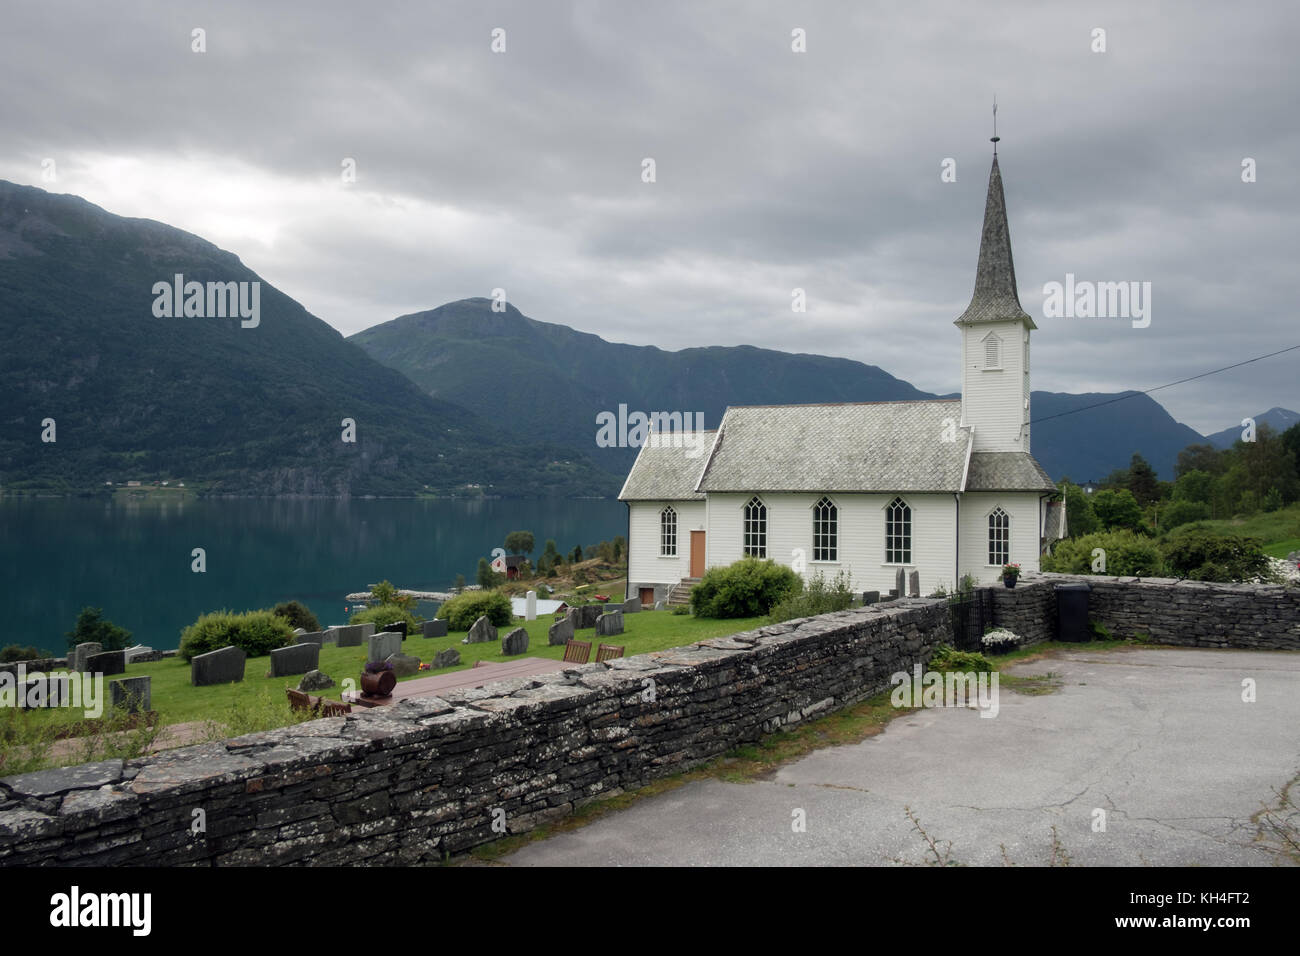 Típica iglesia el cristianismo en Noruega Foto de stock